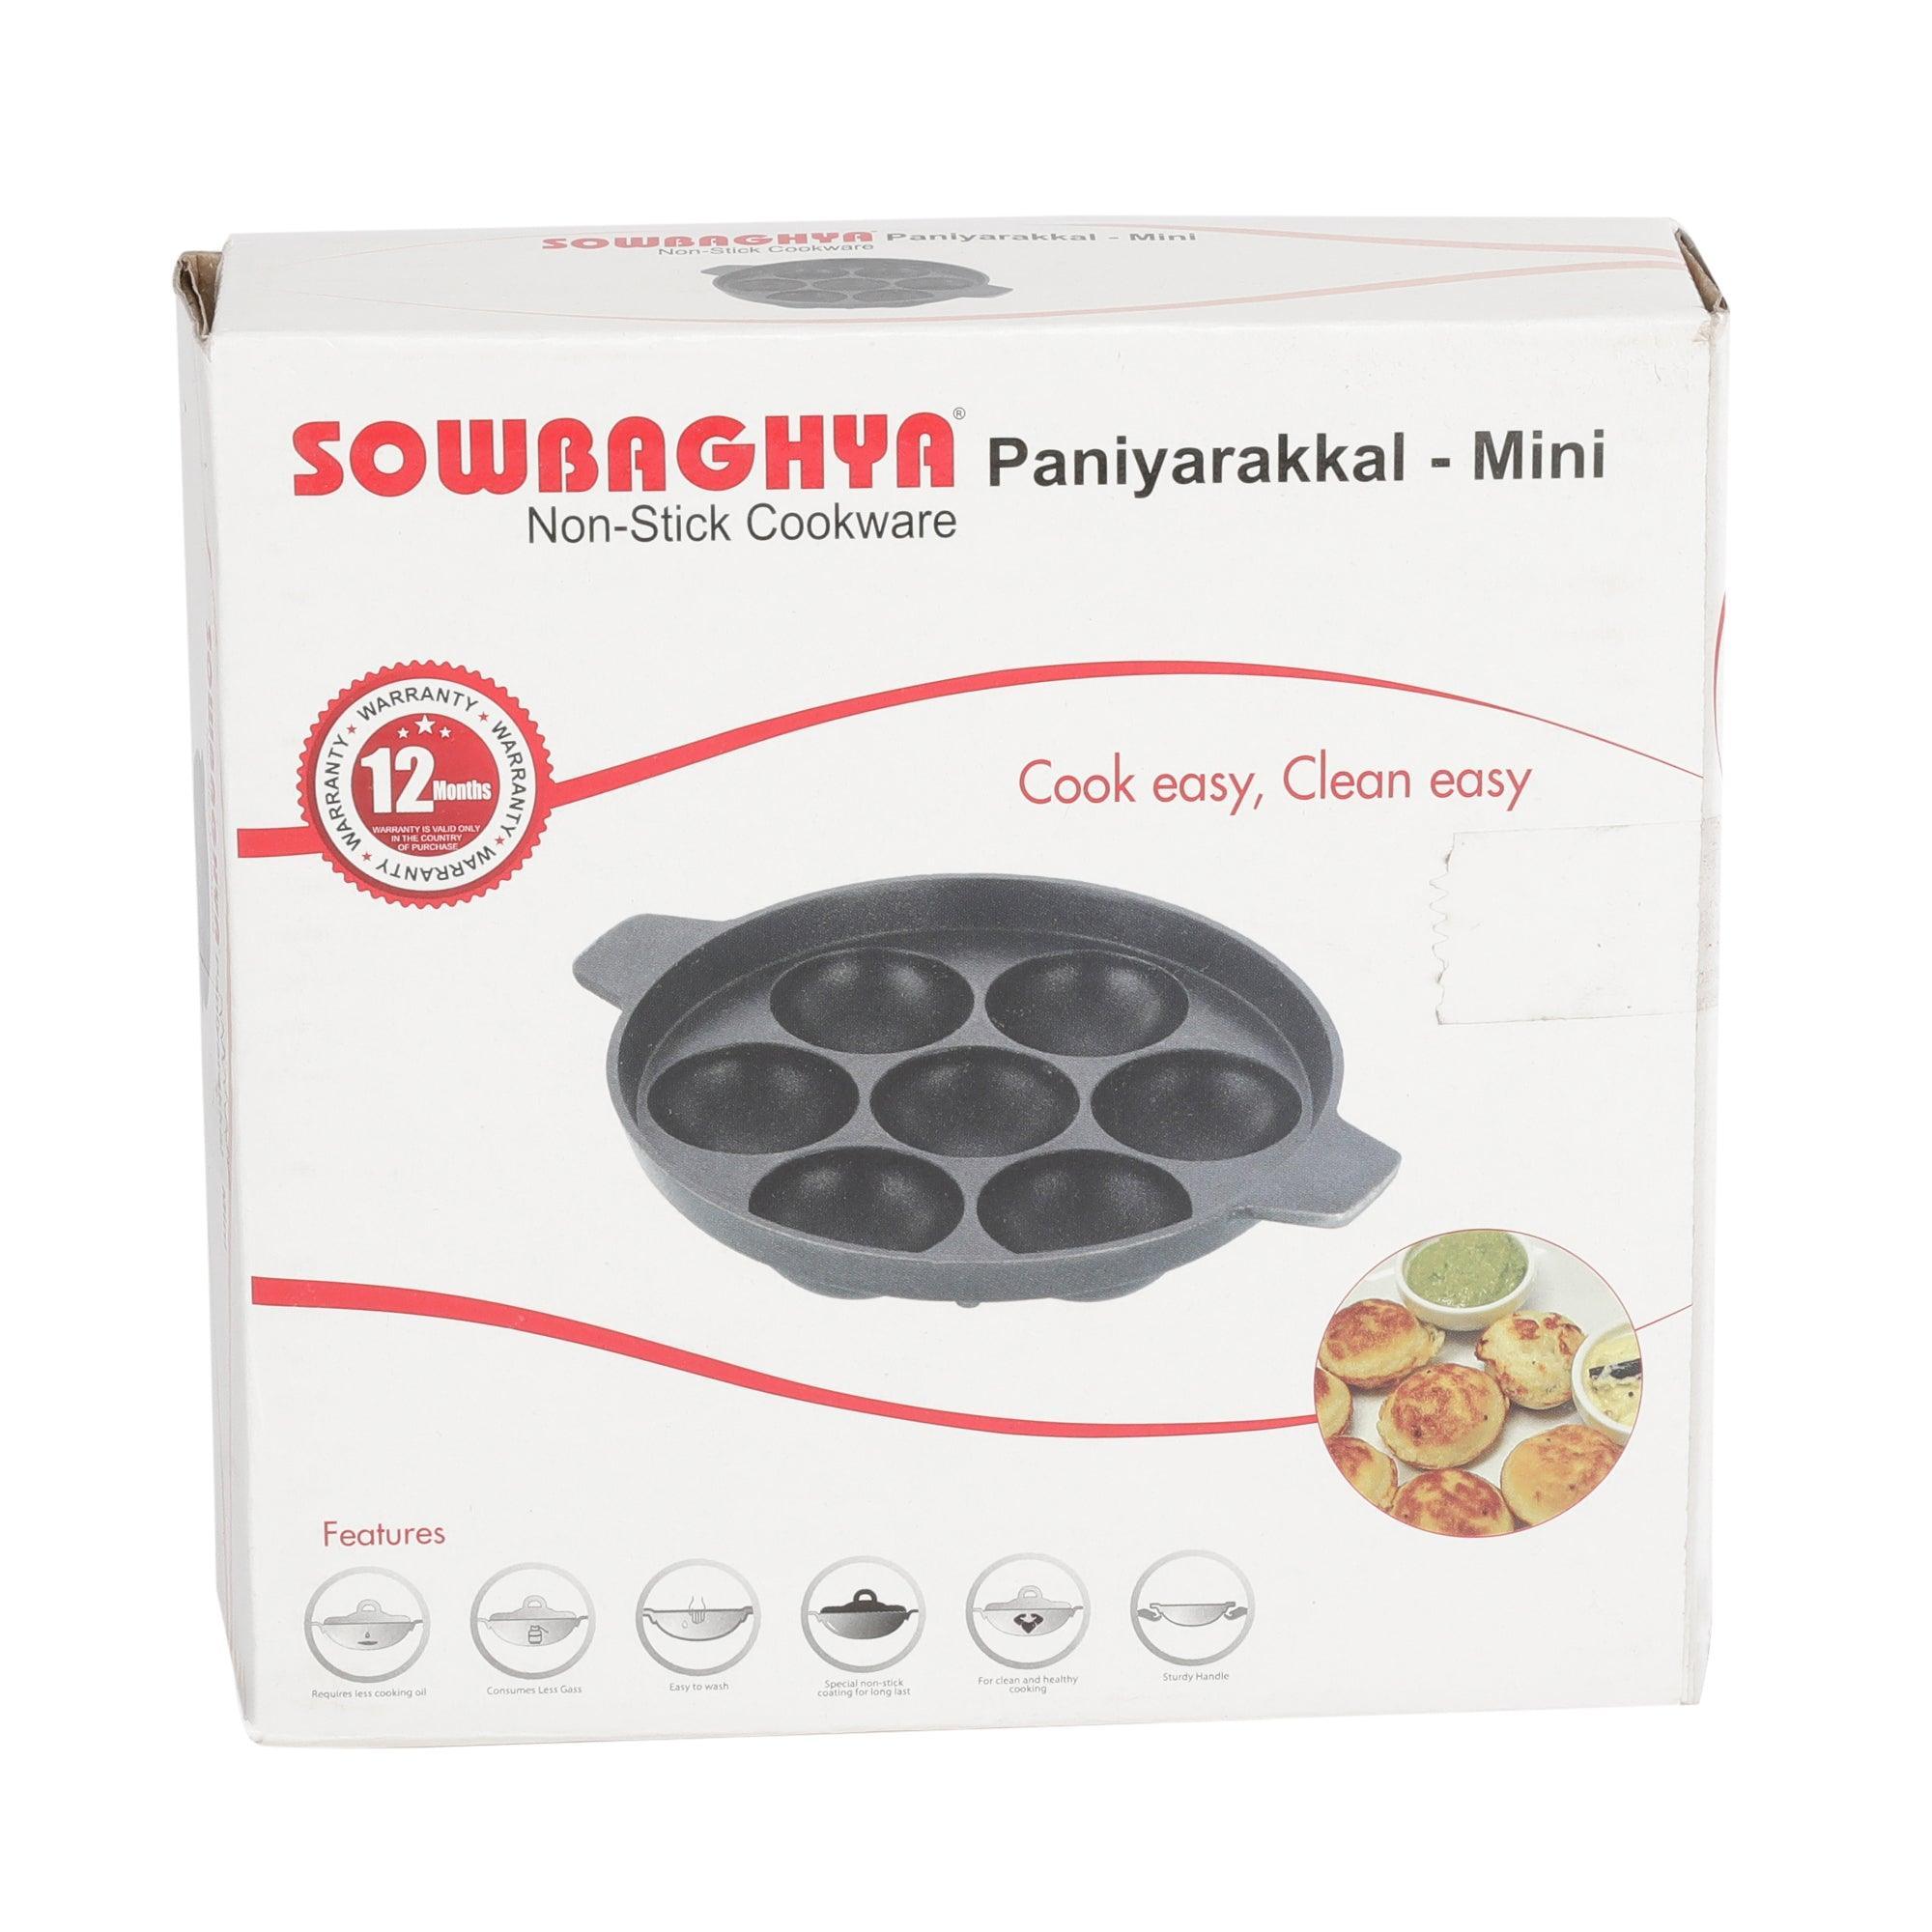 NS Paniyarakkal - Mini (7 Rounds) - SOWBAGHYA